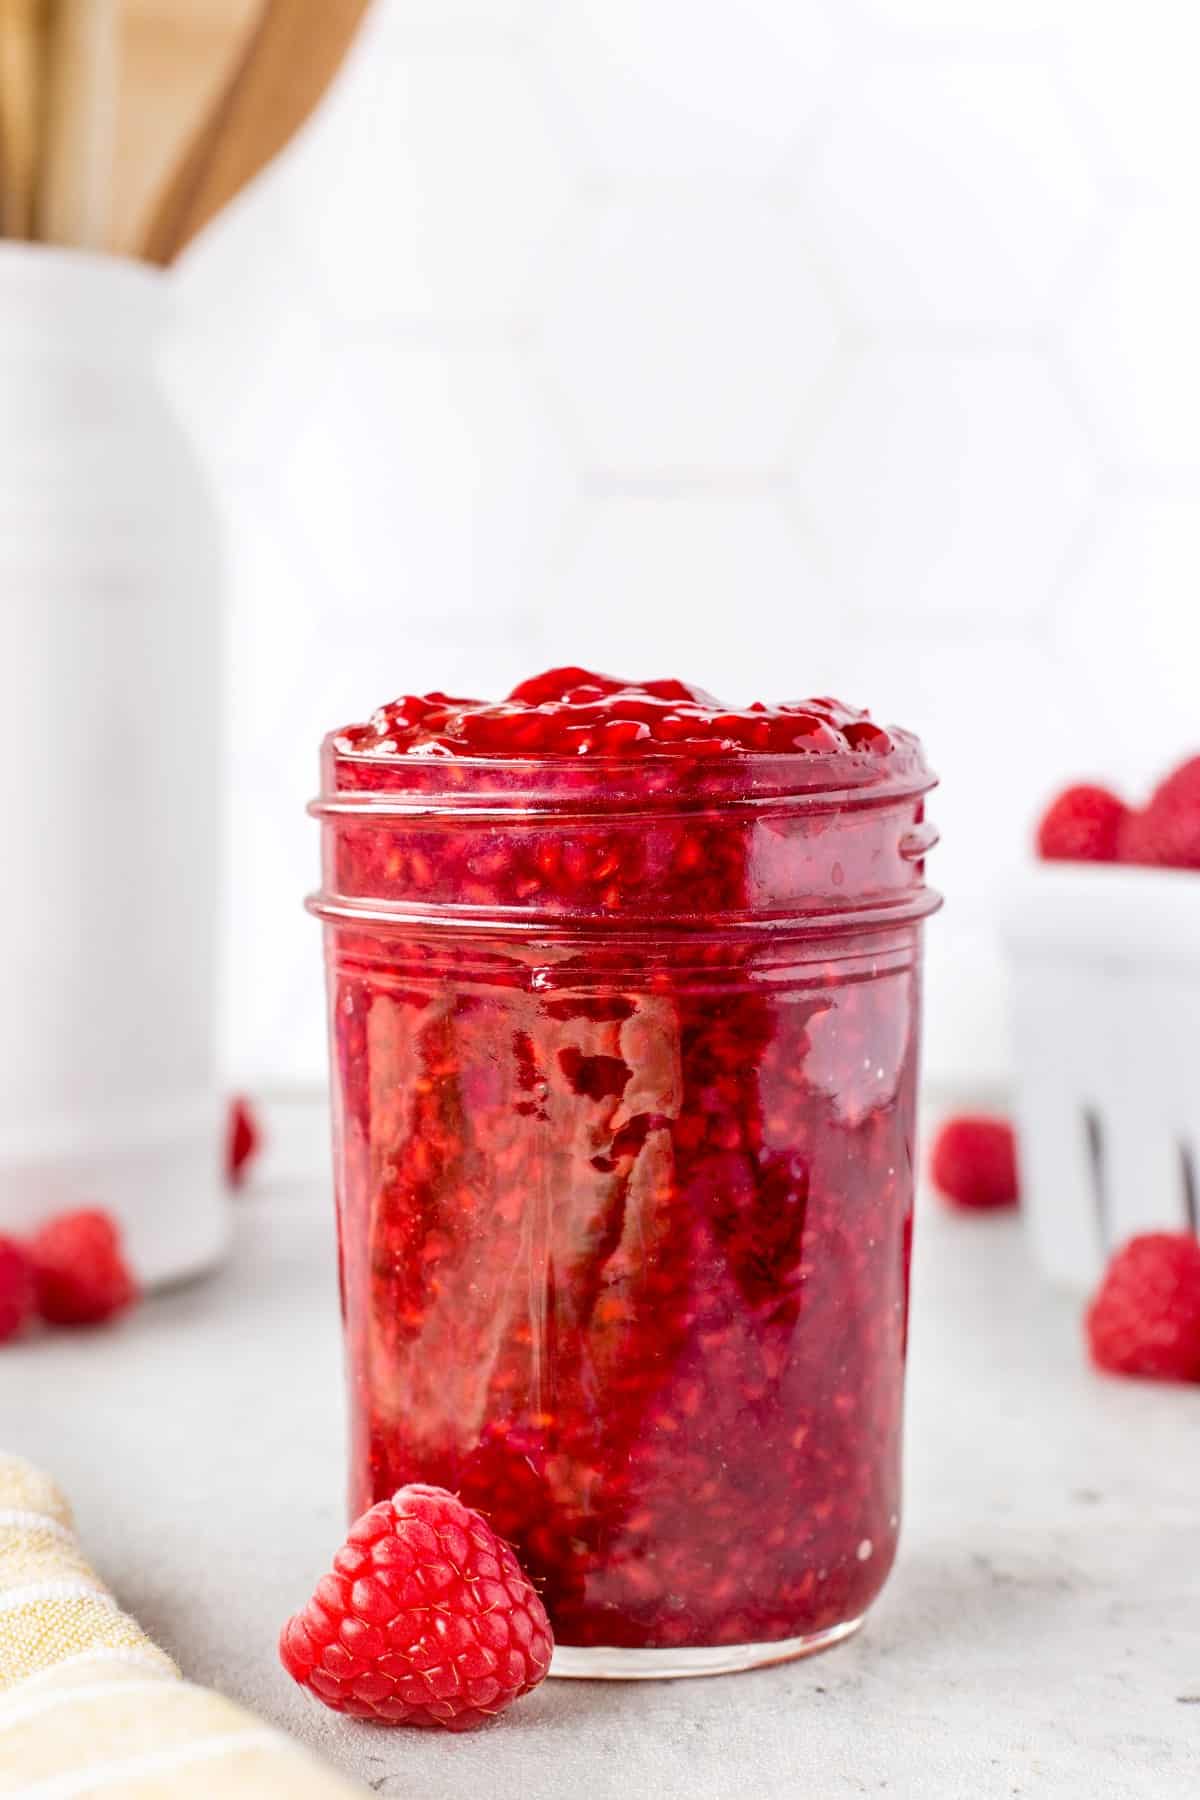 A very full jar of raspberry sauce